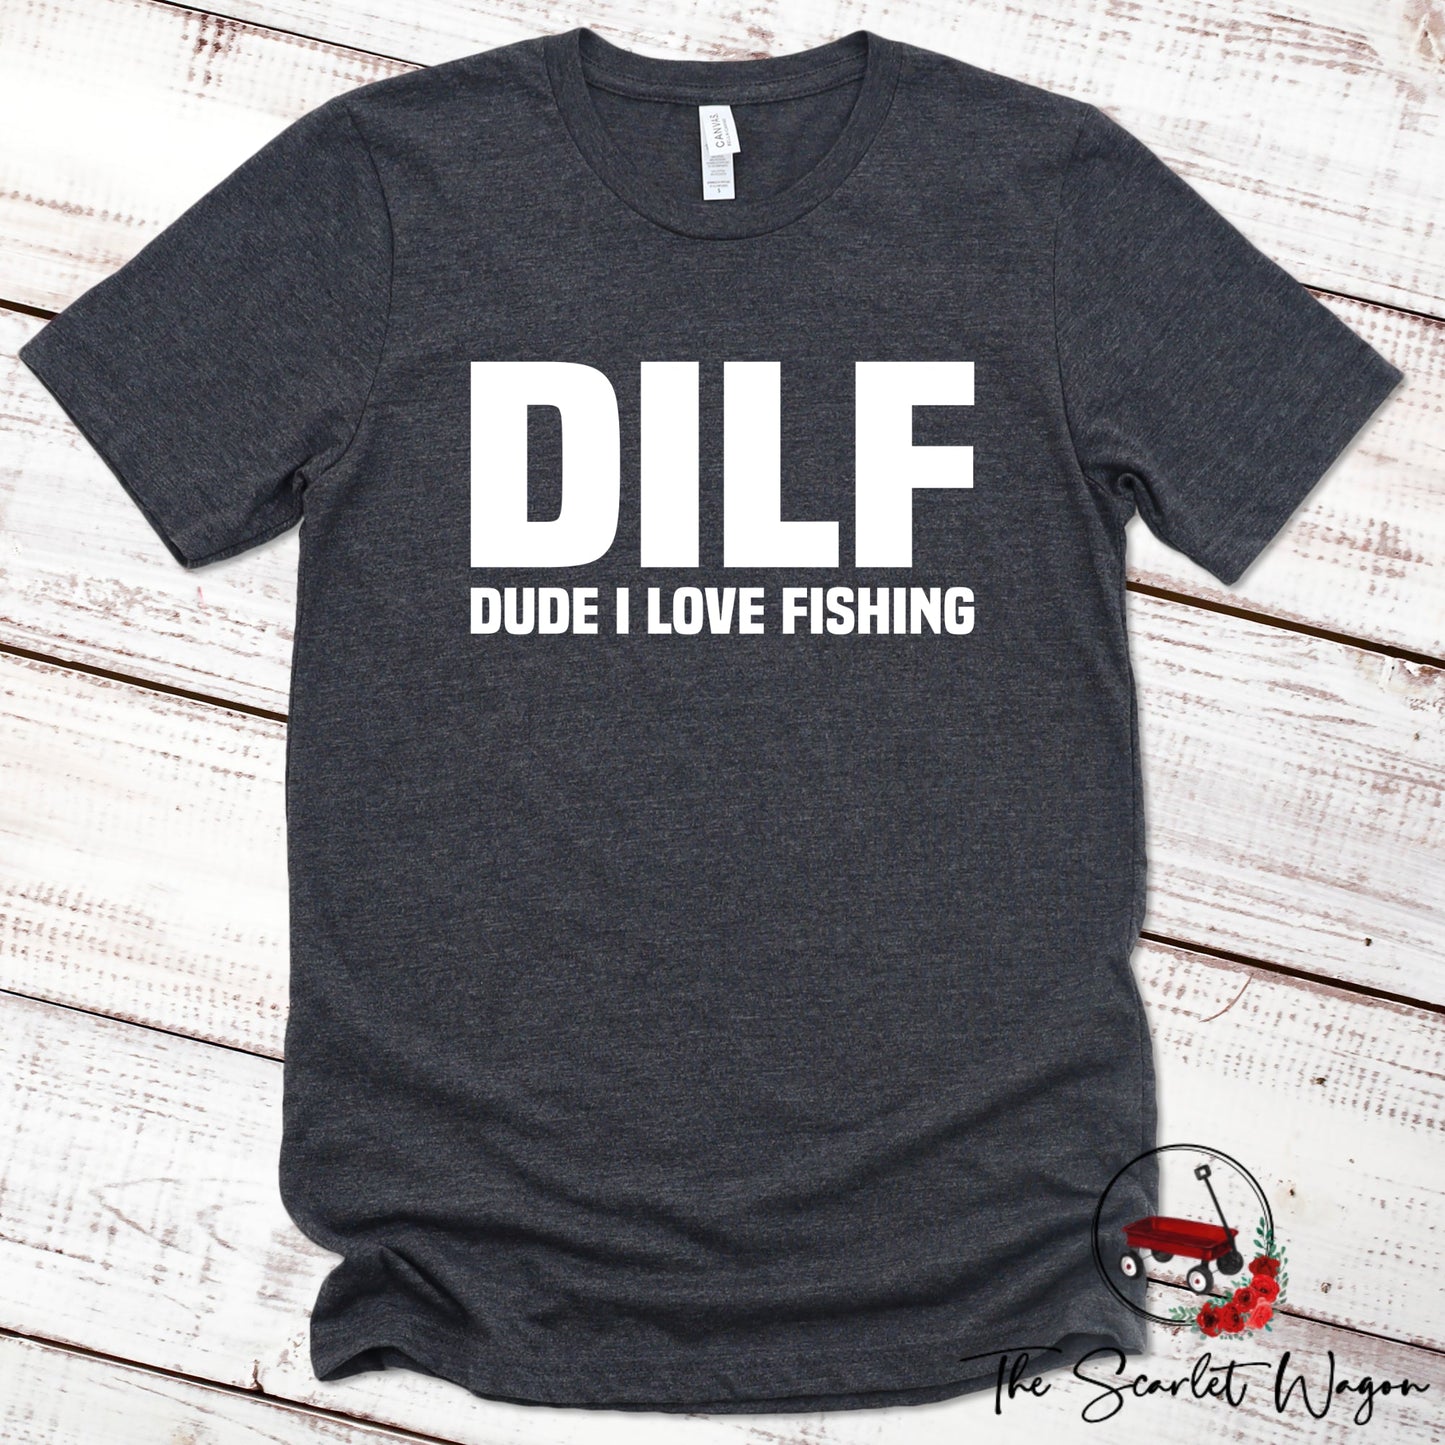 DILF - Dude I Love Fishing Premium Tee Scarlet Wagon Dark Gray Heather XS 